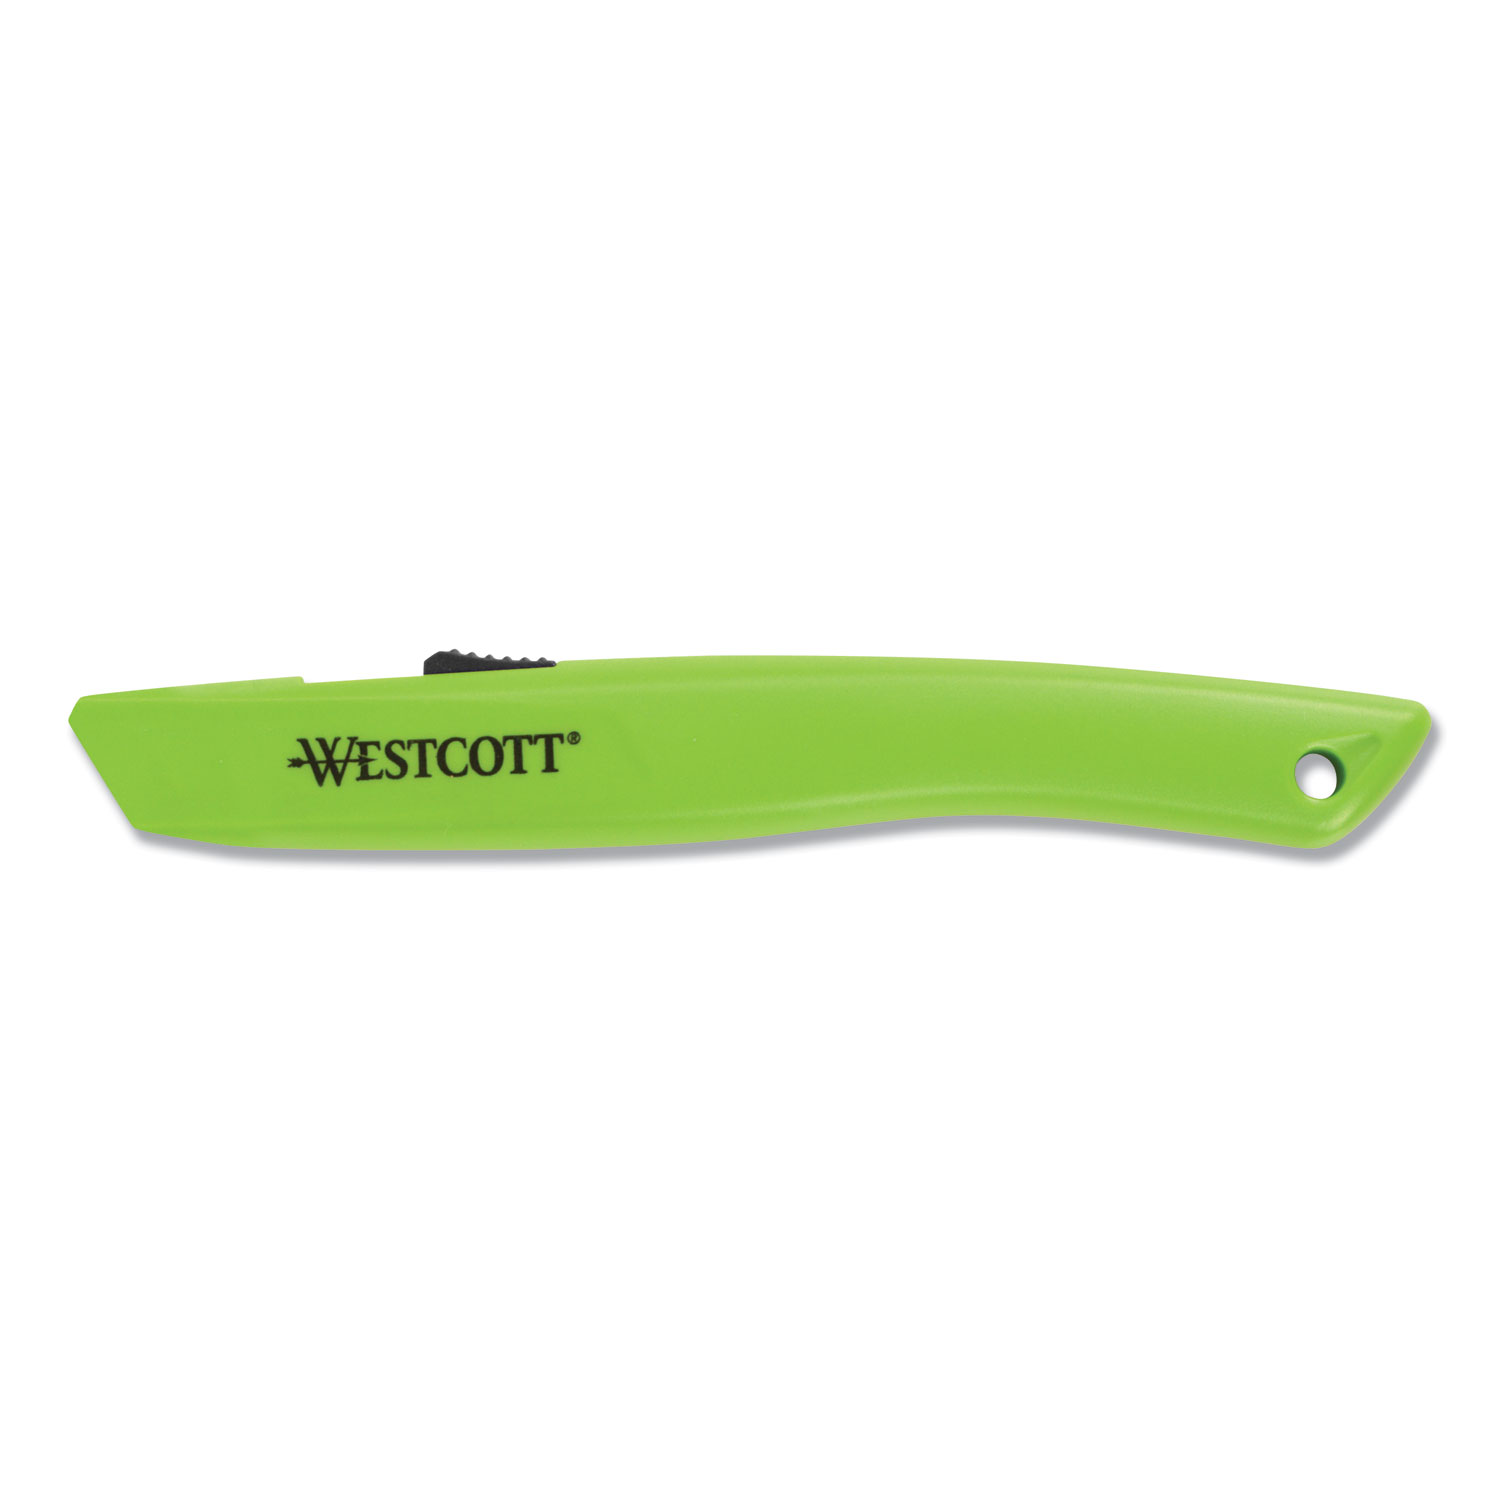  Westcott 17519 Safety Ceramic Blade Box Cutter, 6.15, Green (ACM17519) 